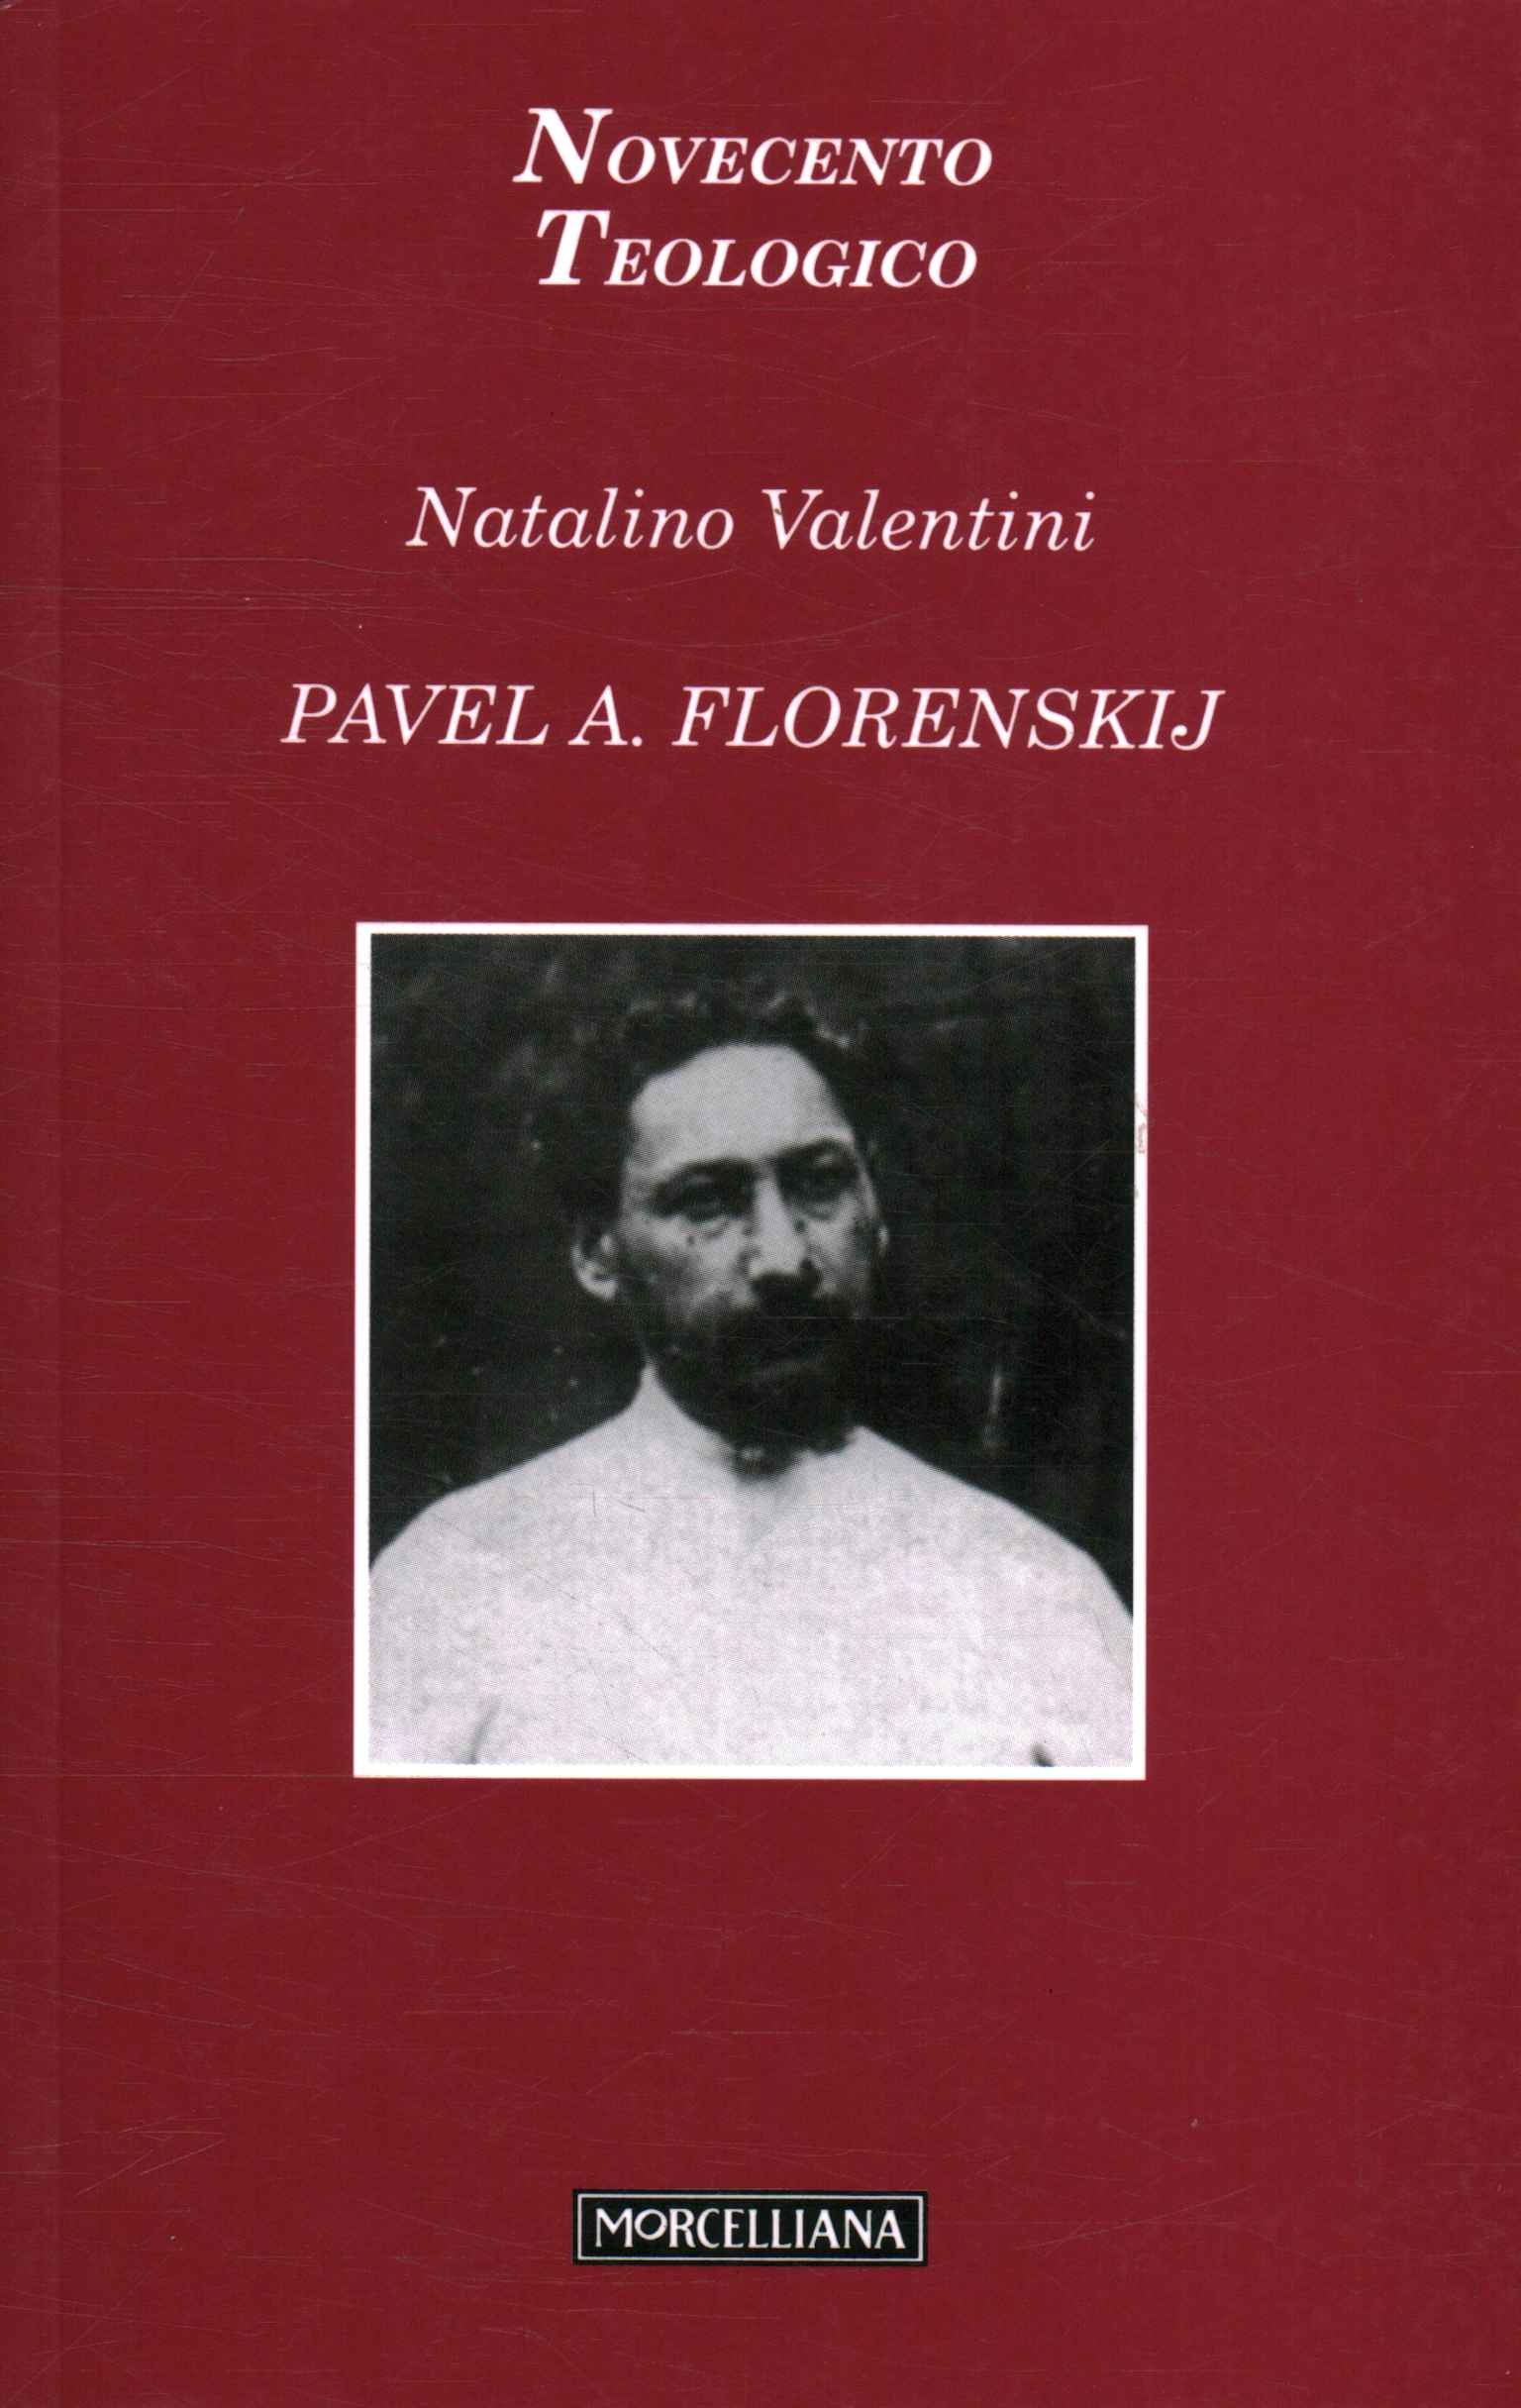 Amazement and dialectics, Pavel A. Florenskij